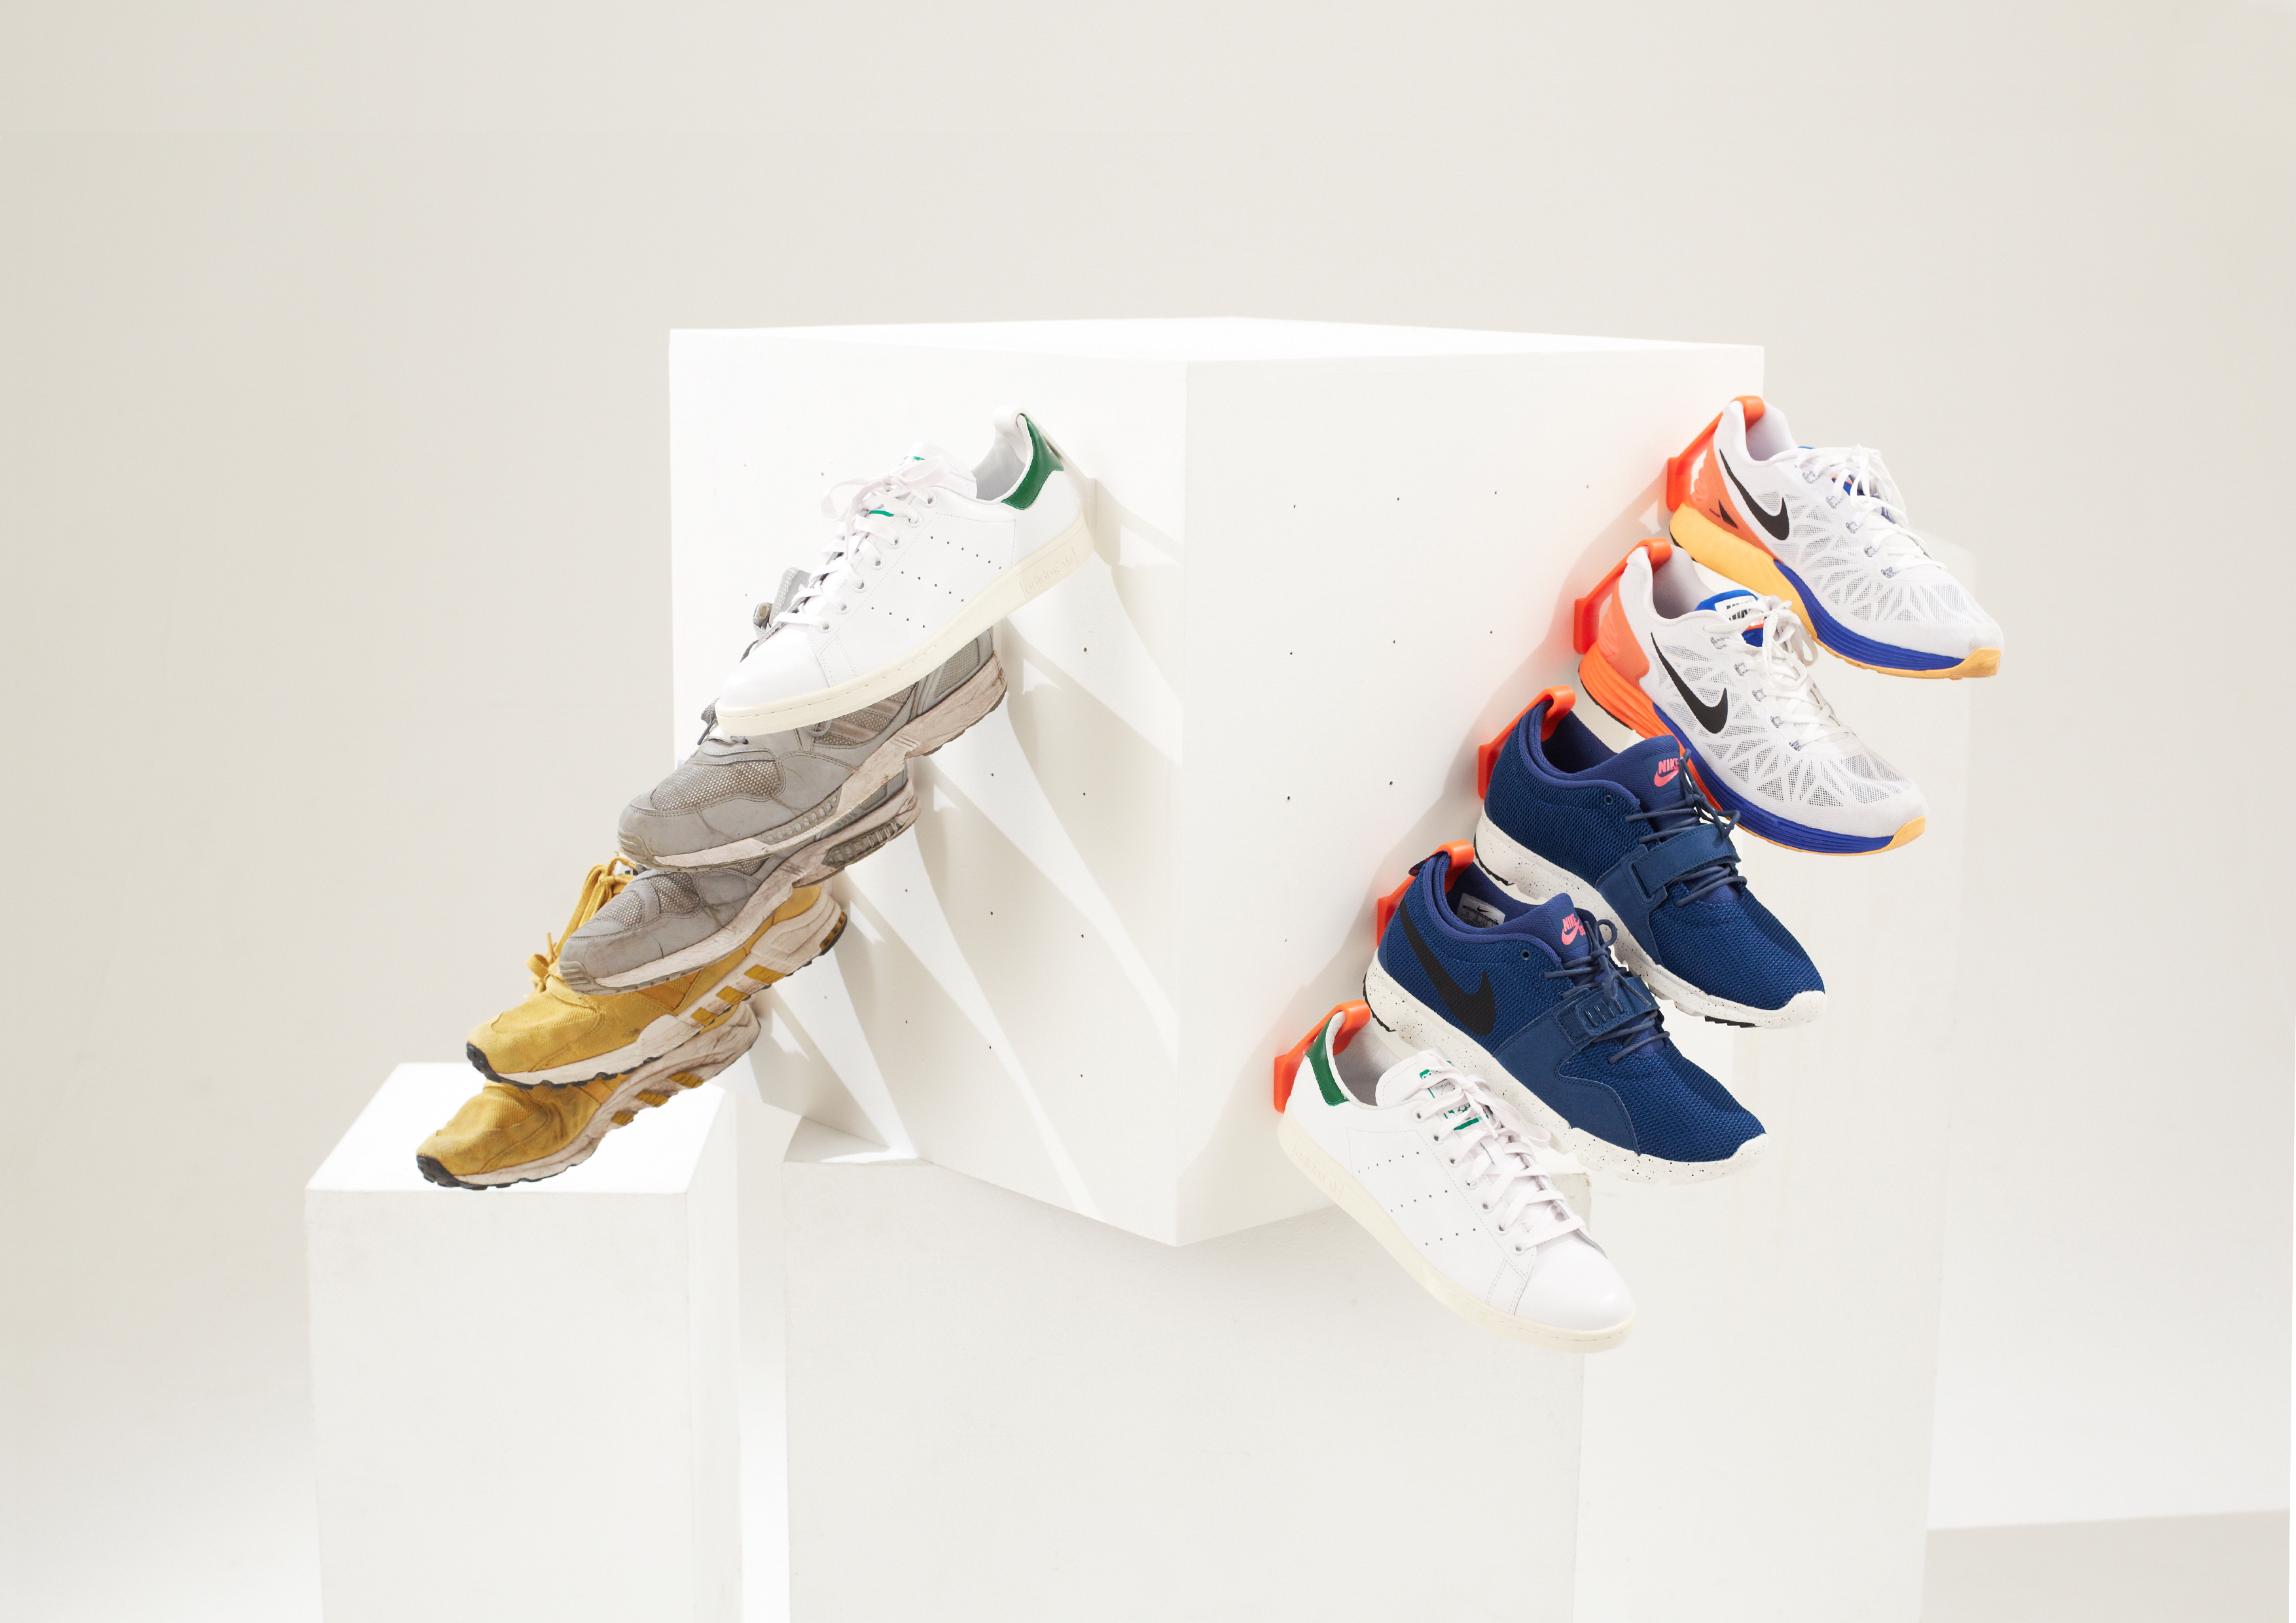 https://www.clutter.com/blog/wp-content/uploads/2015/11/13161425/white-orange-staeckler-shoe-storage-hooks-sneakers-cube.jpg